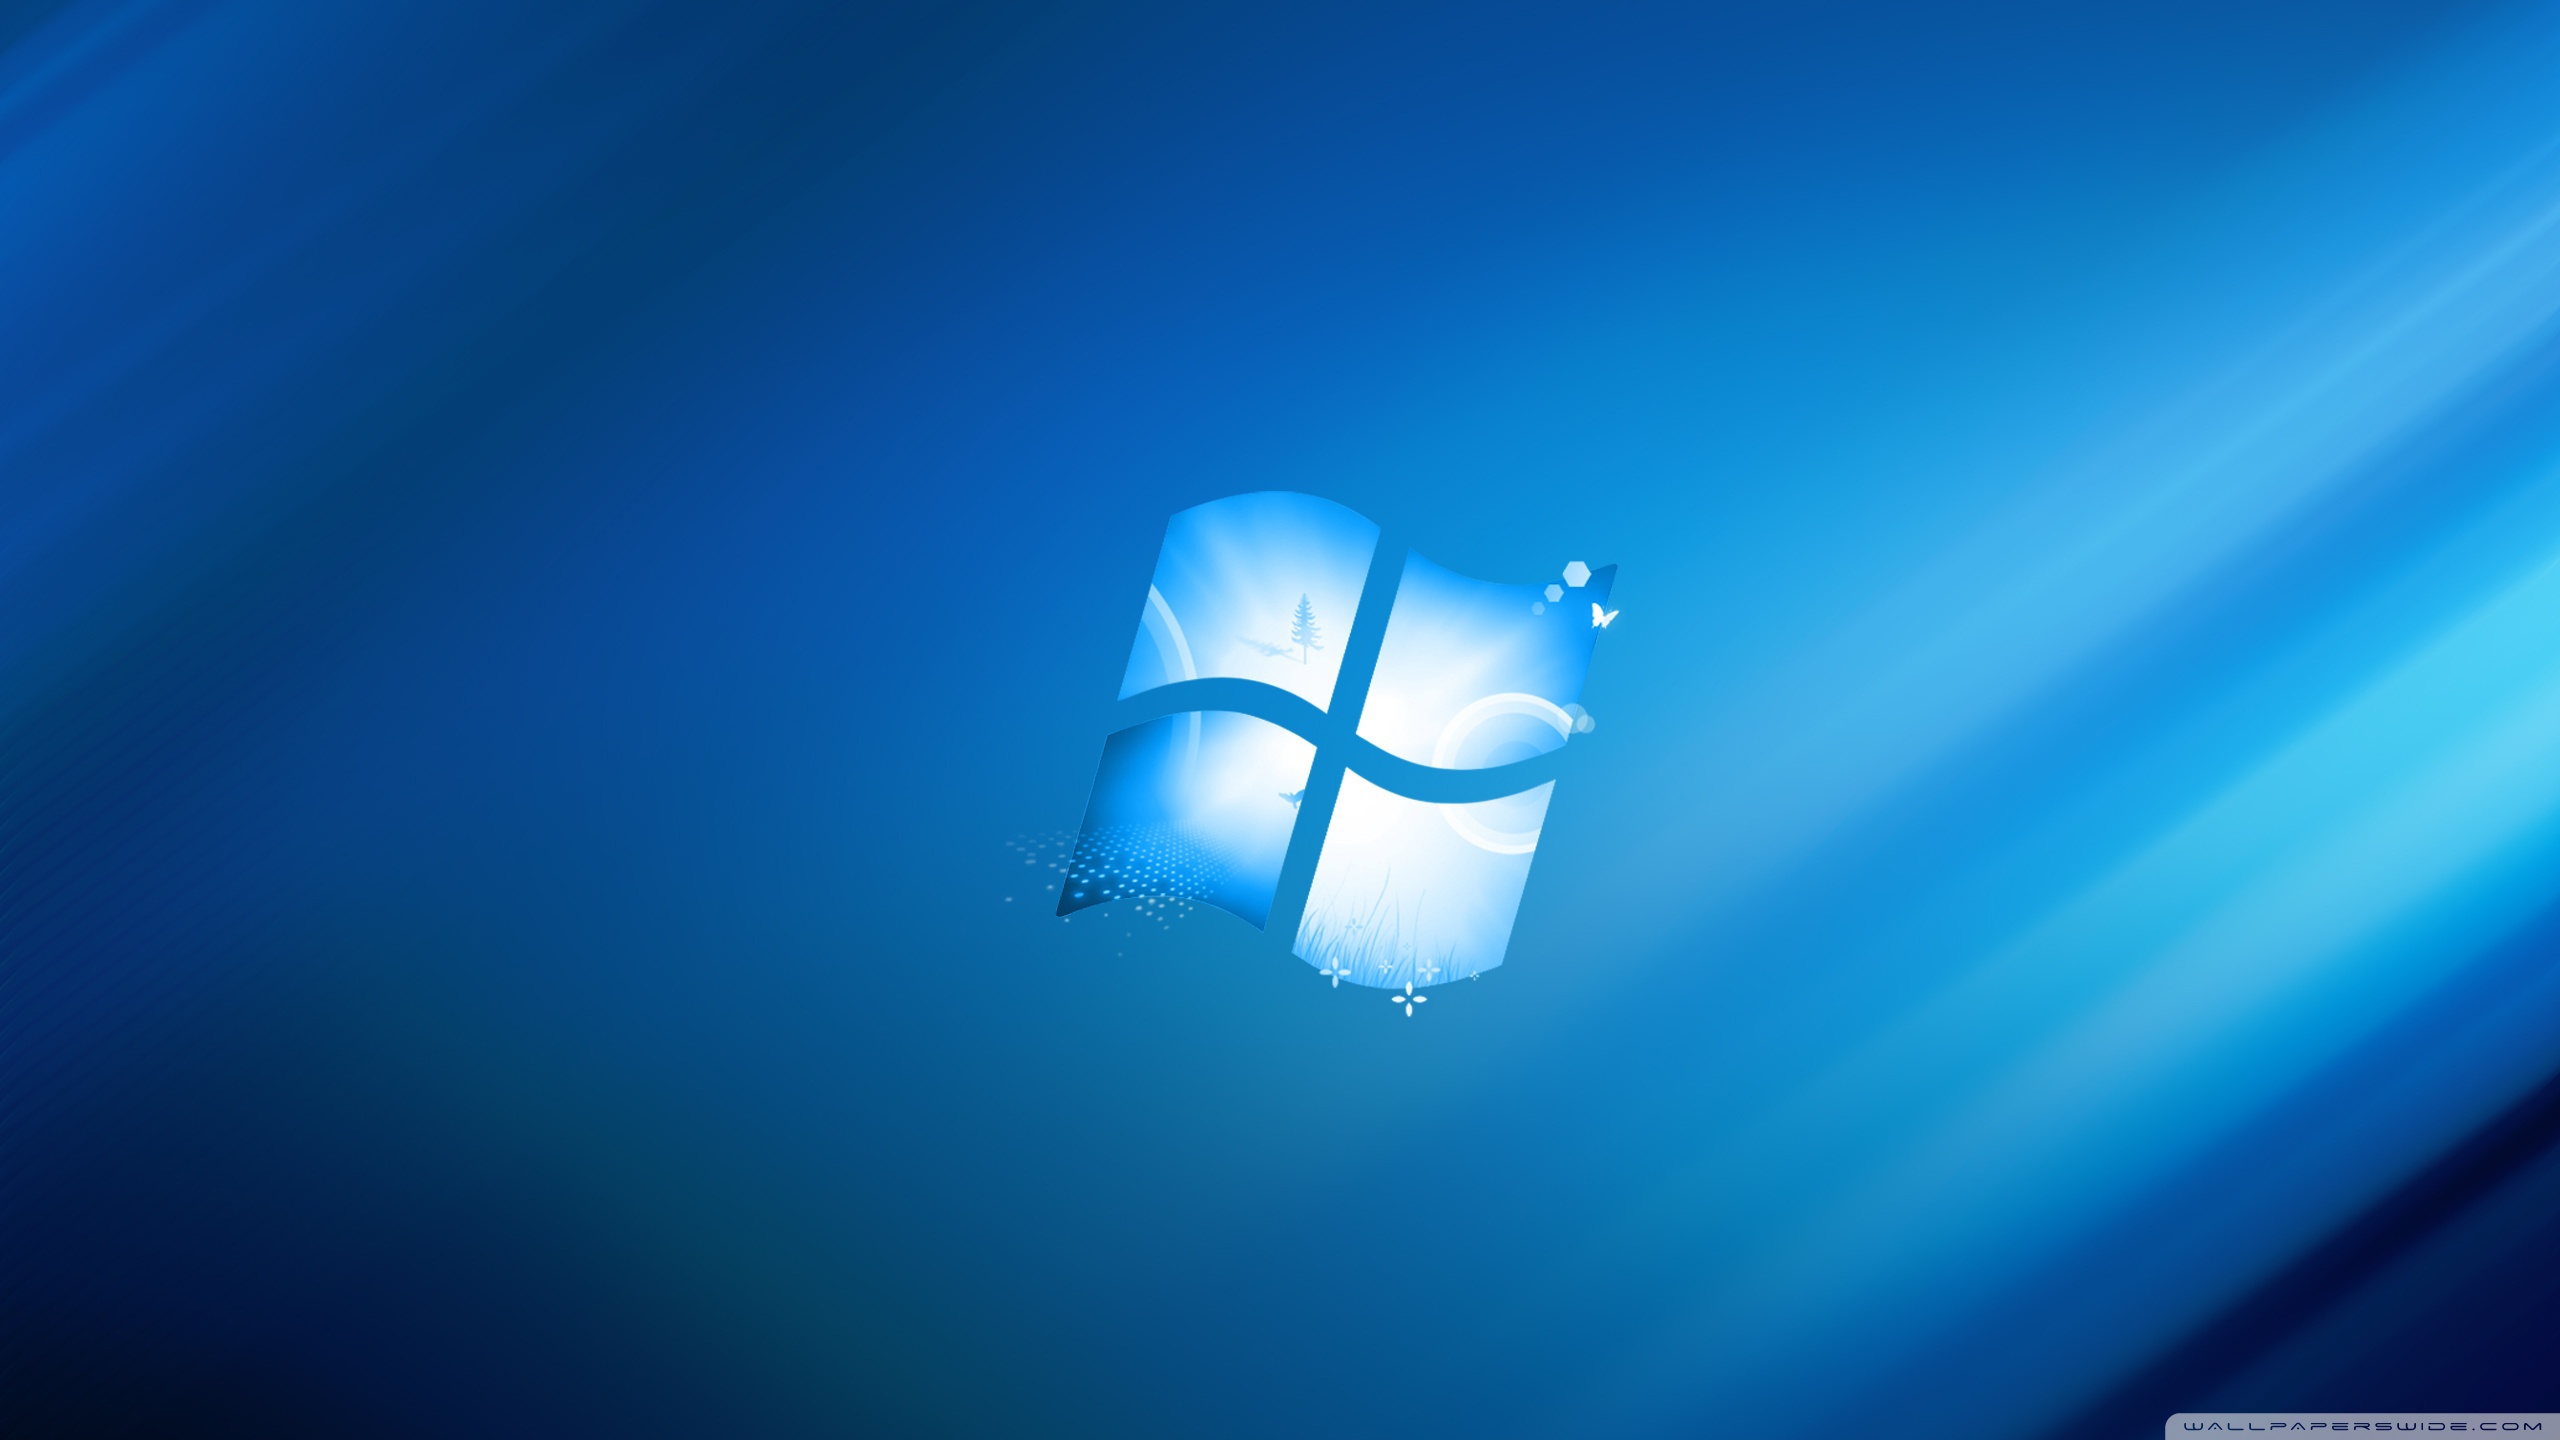 Computers   Windows 8 Windows 8 blue theme 042103 jpg